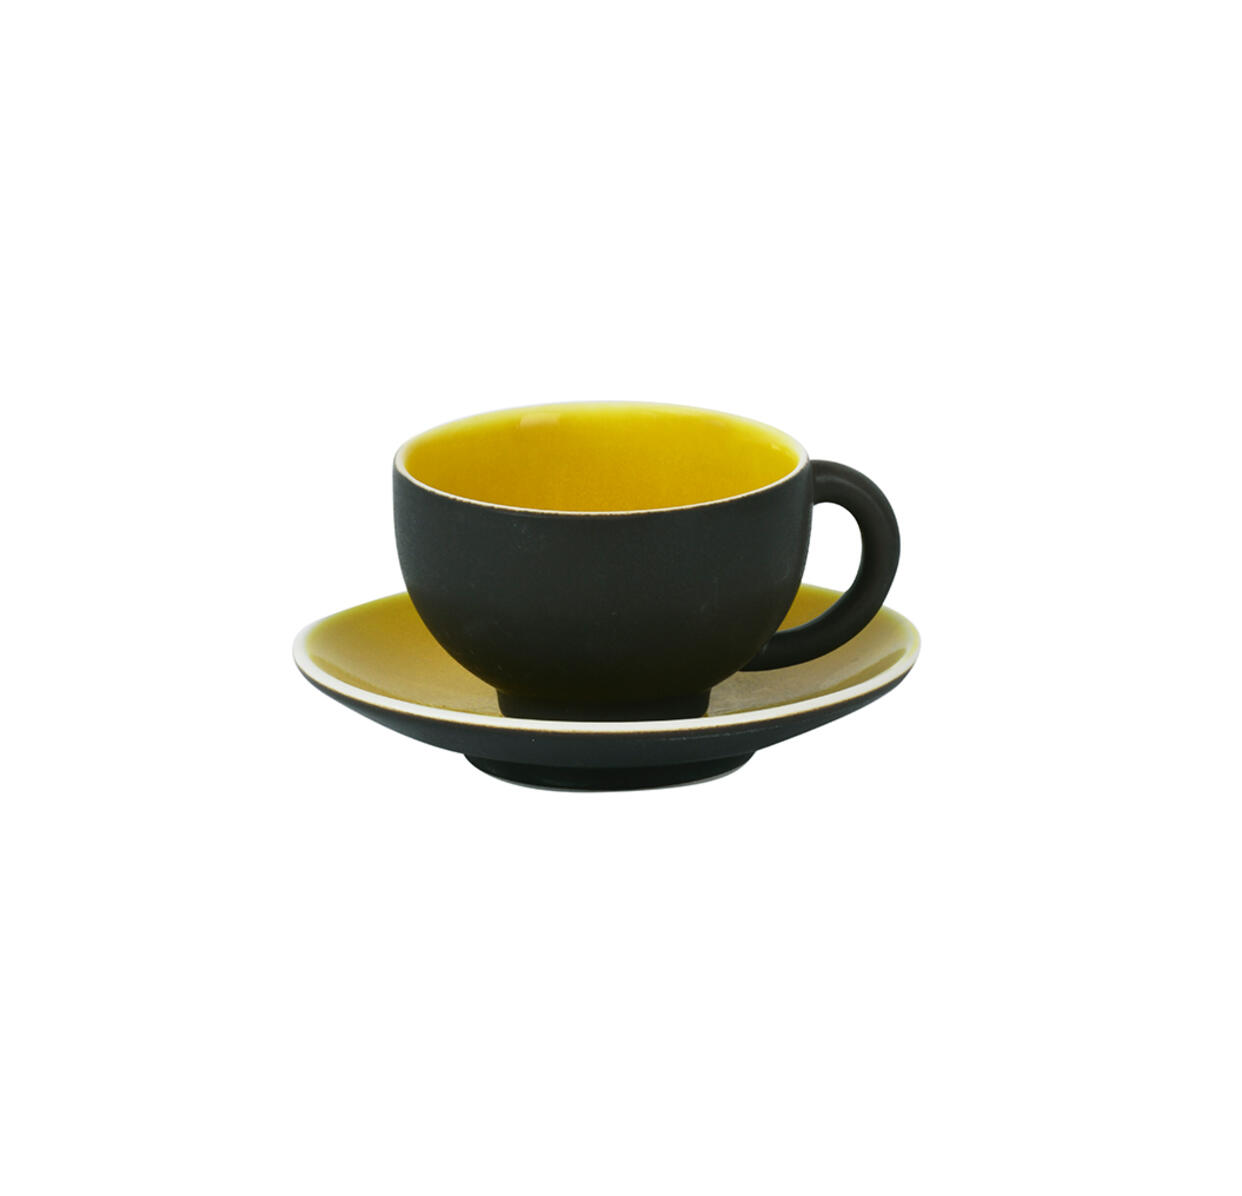 cup & saucer - m tourron citron ceramic manufacturer